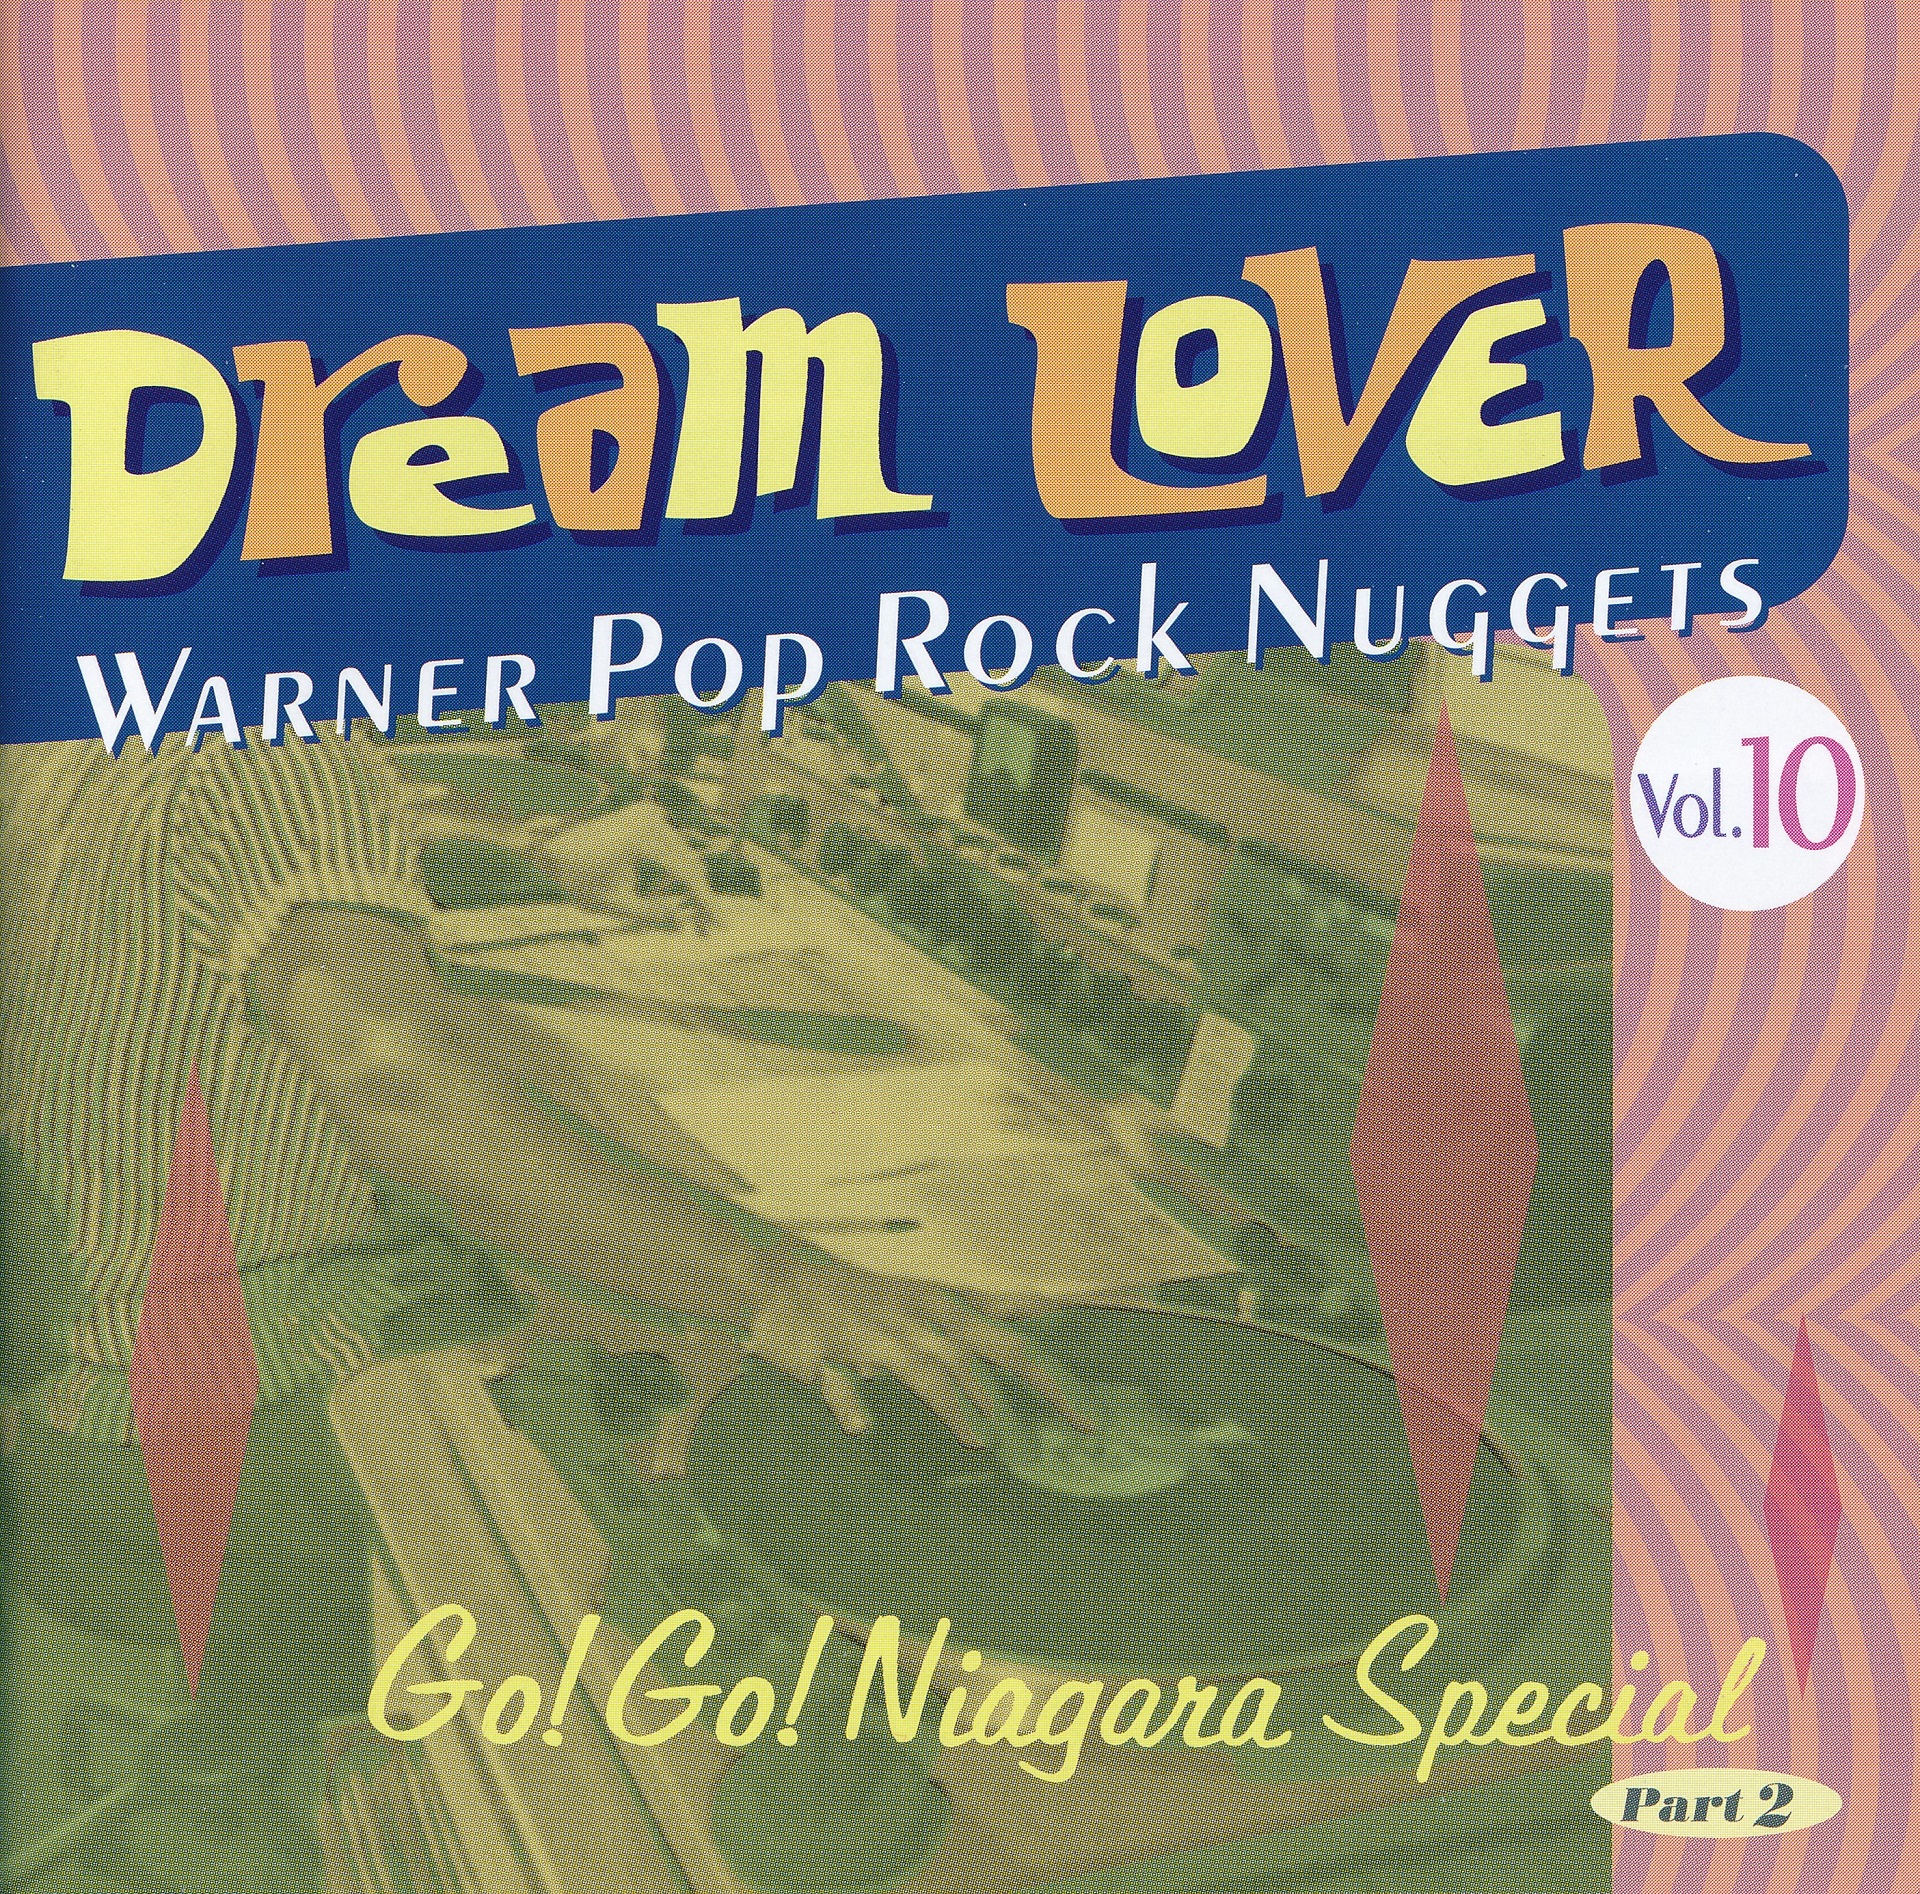 Warner Pop Rock Nuggets Volume 10 Dream Lover